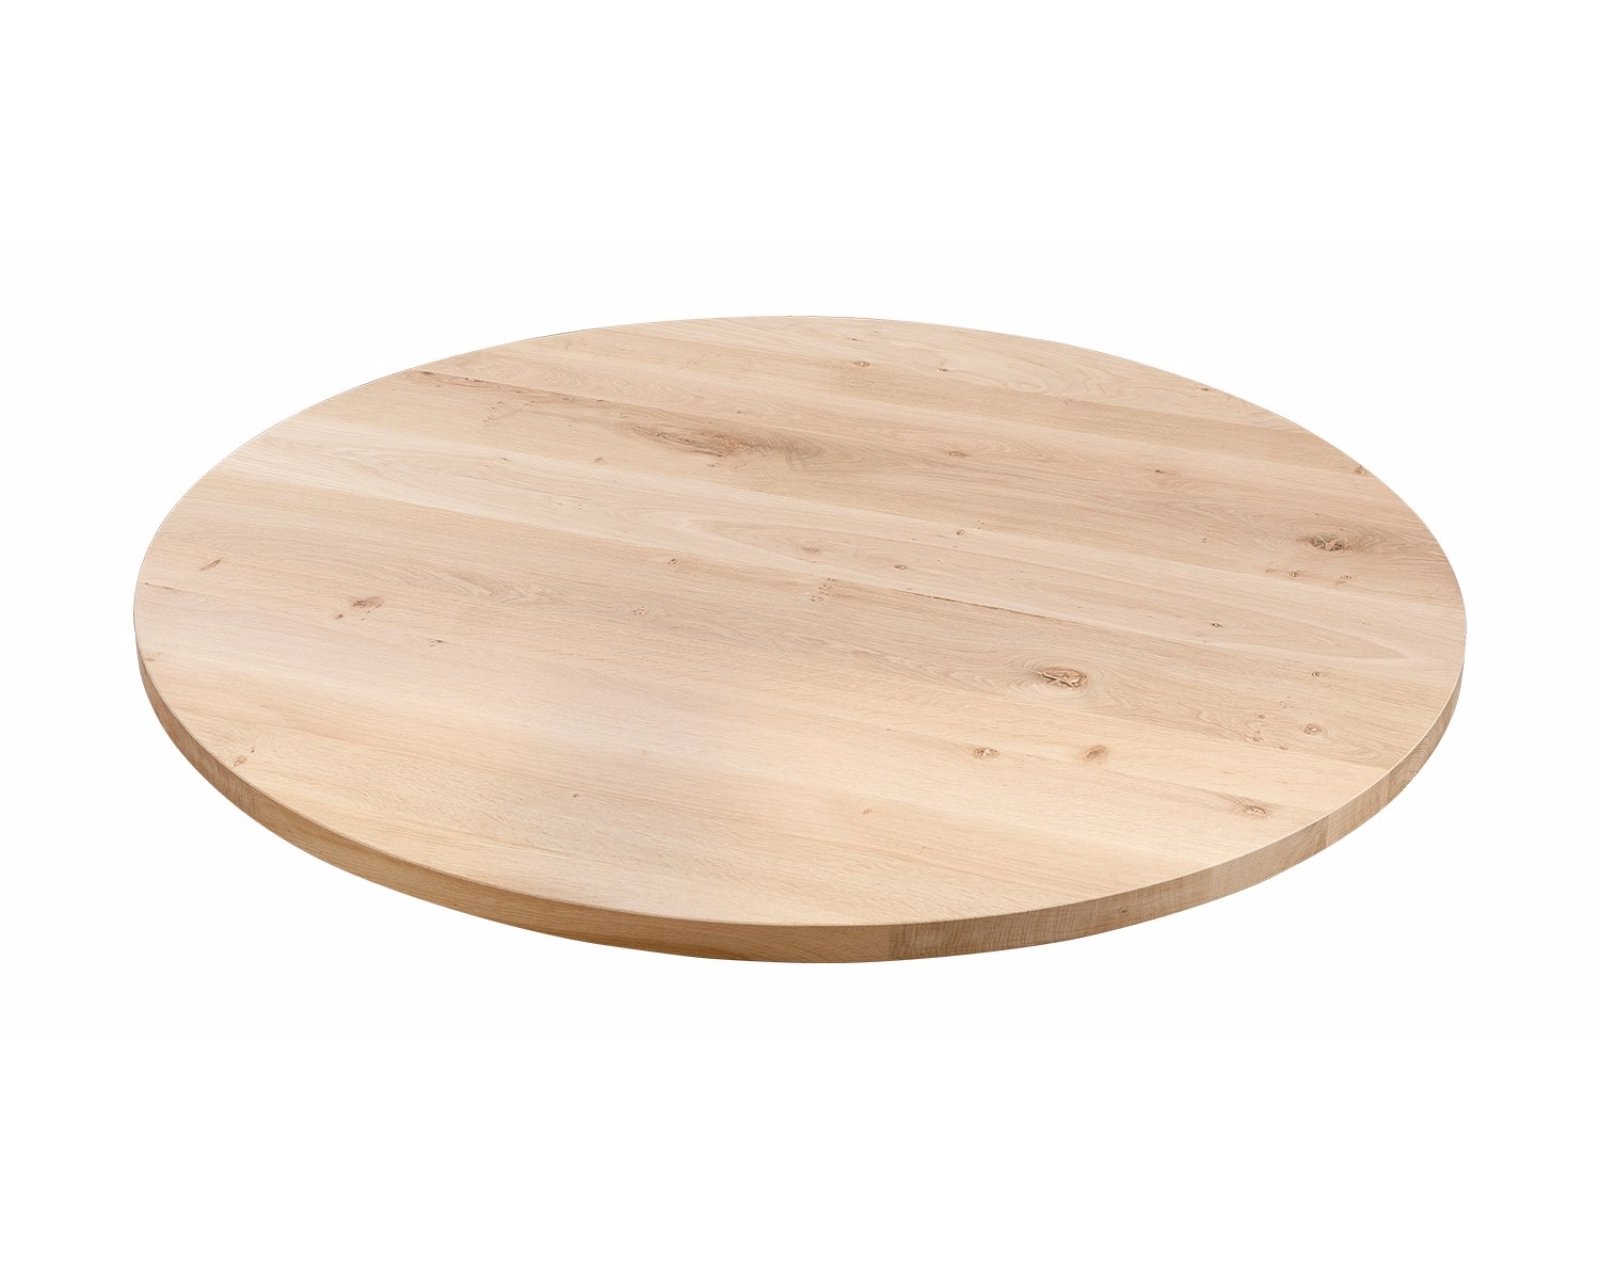 Round oak dining table V-leg